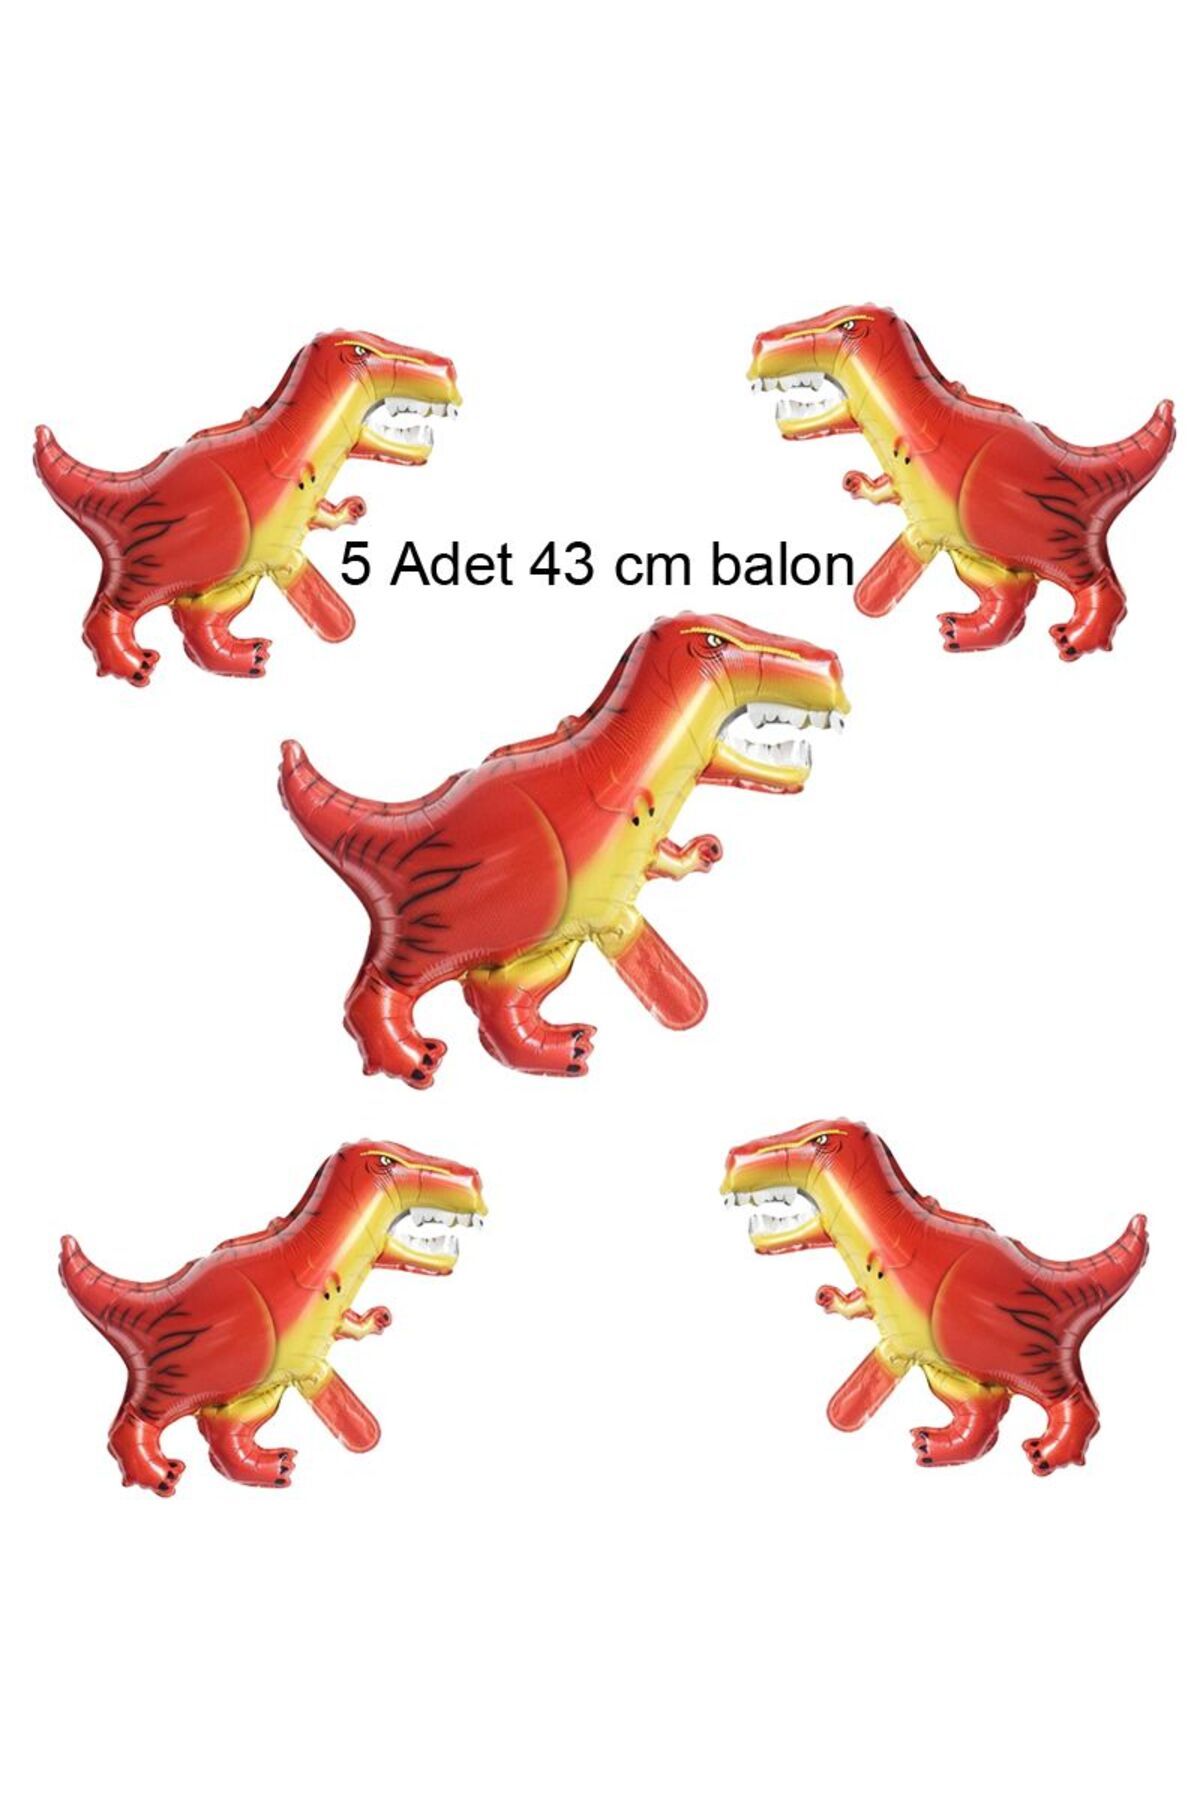 partidolu Tyrannosaurus Shape Şekilli Kahve Renk Dinozor Folyo Balon 43 Cm 5 Adet